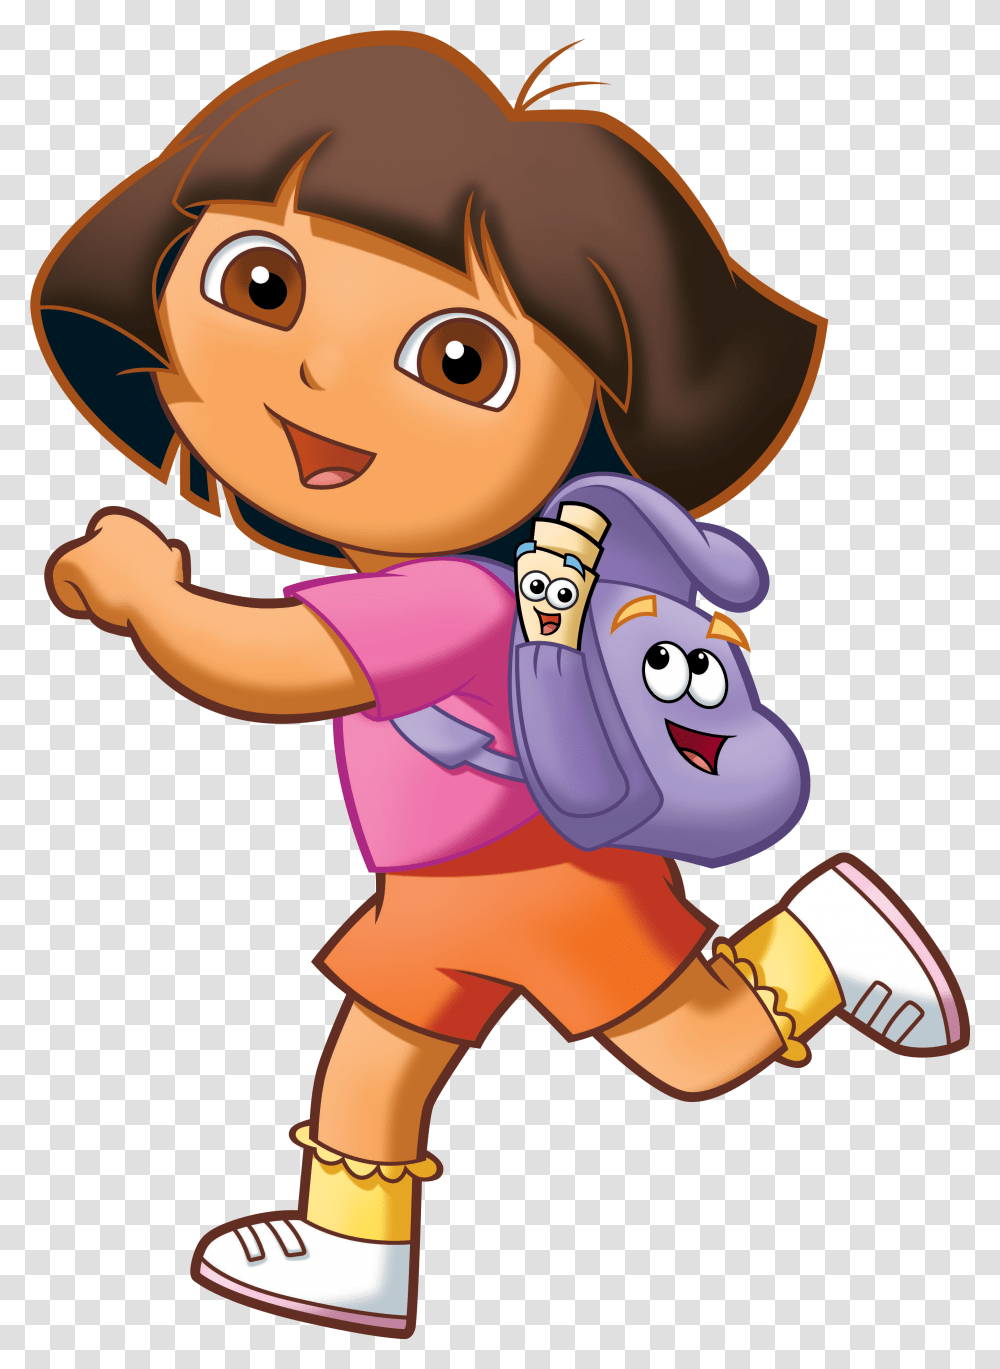 Check Out This Dora The Explorer Running Image Dora The Explorer Transparent Png